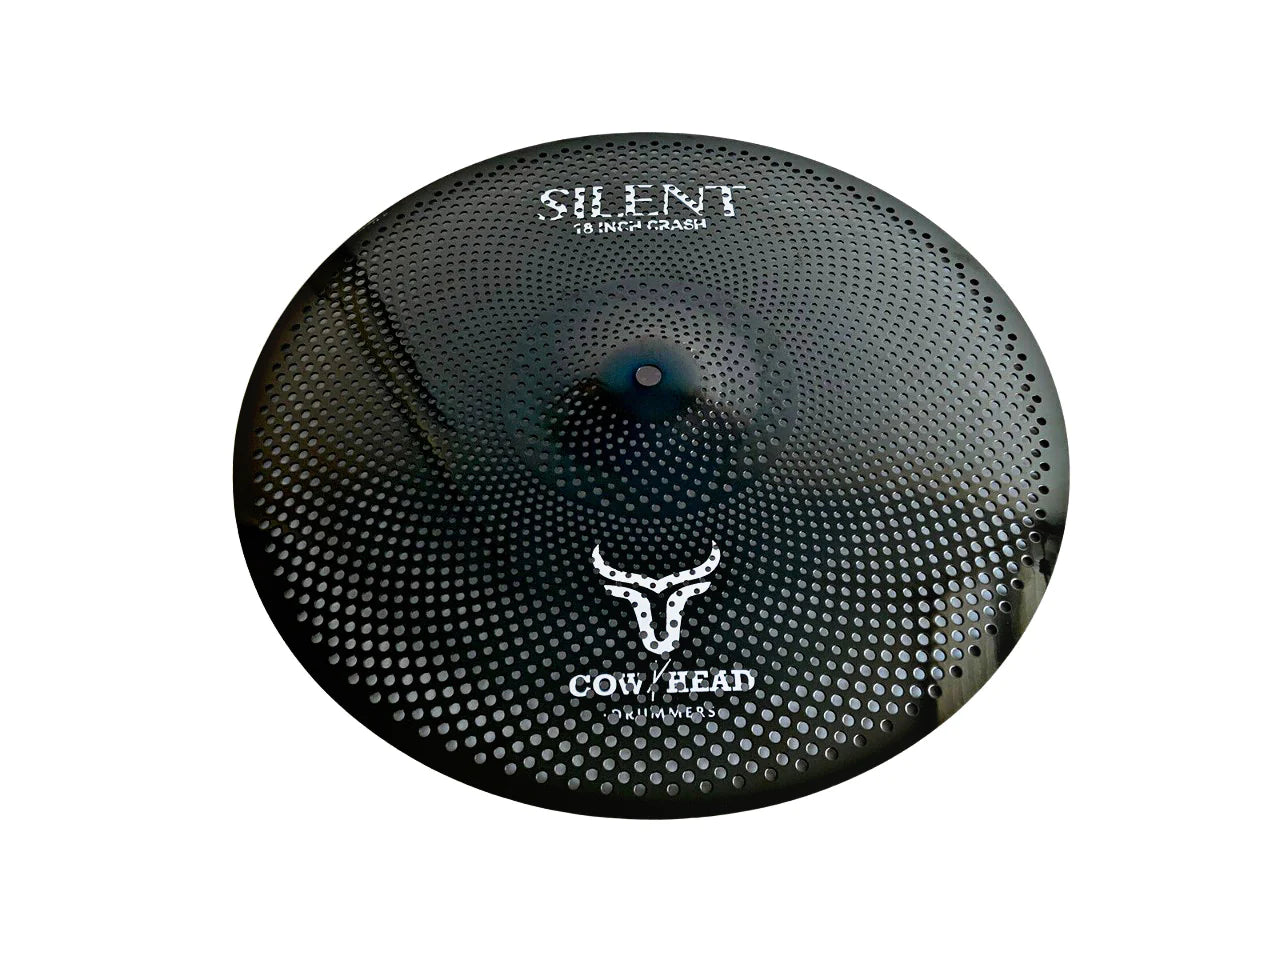 Silent cymbal set